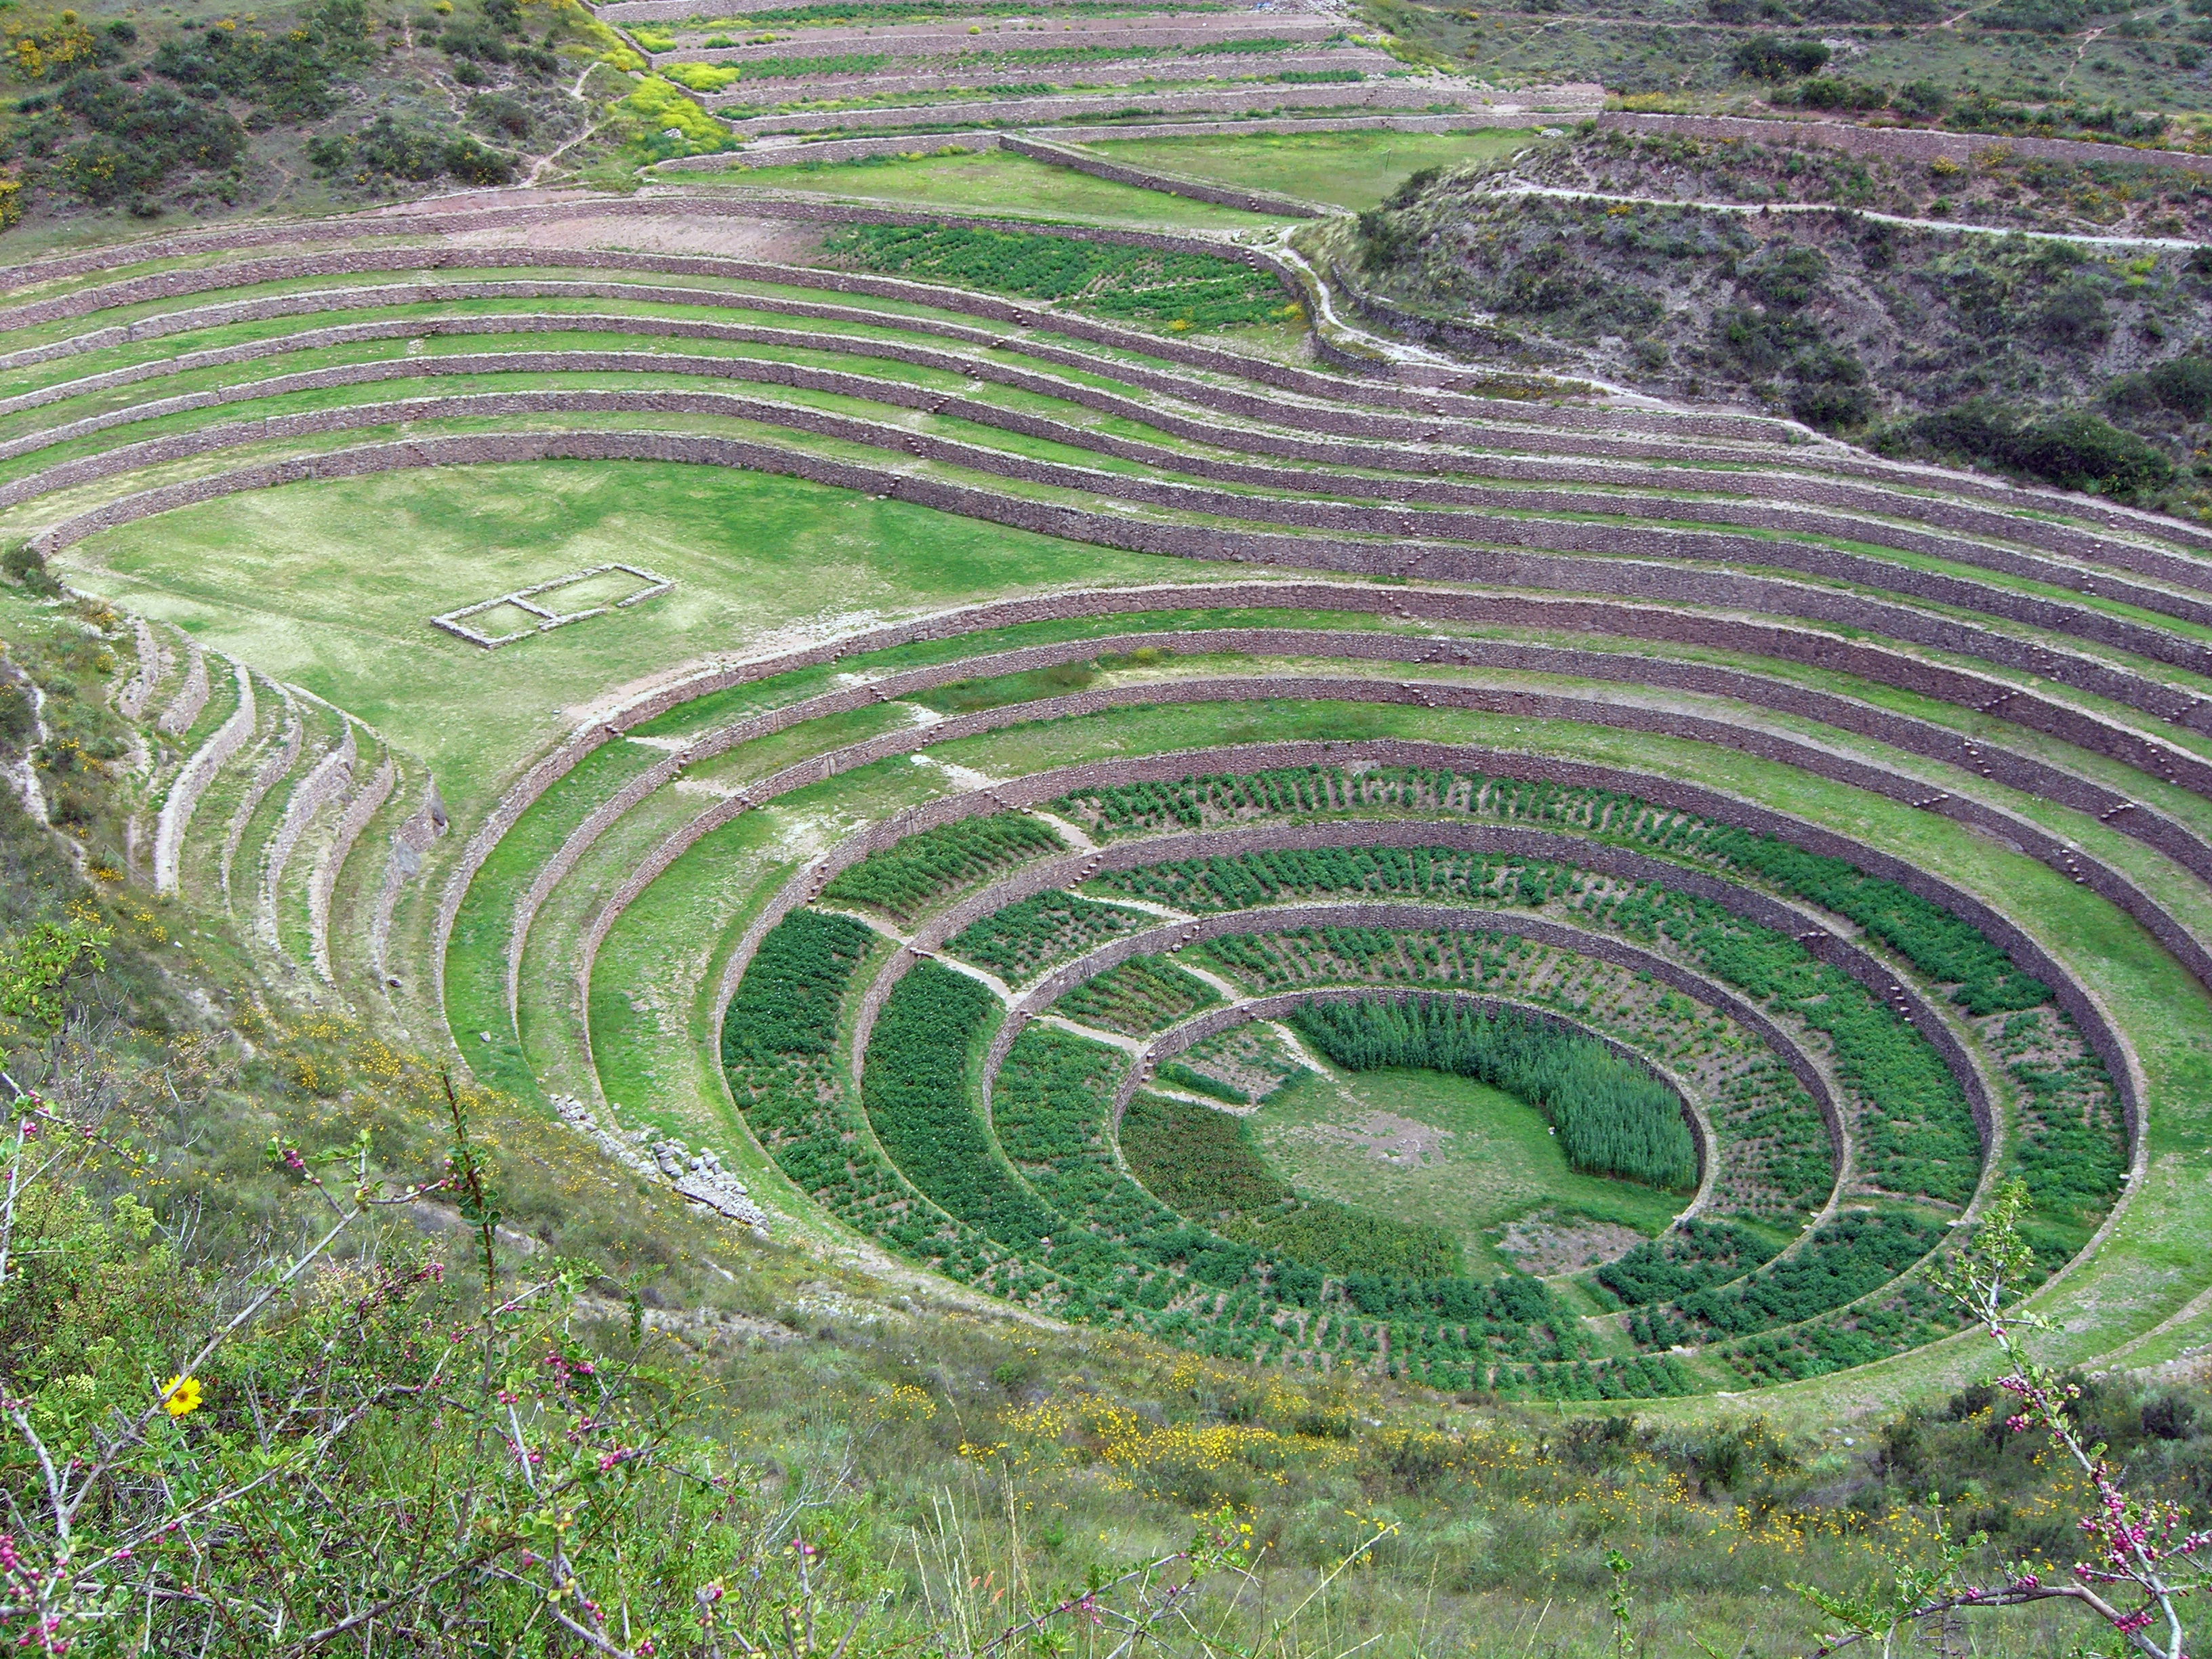 Moray, also known as Muray in Quechua, a collection of terraced circular architecture